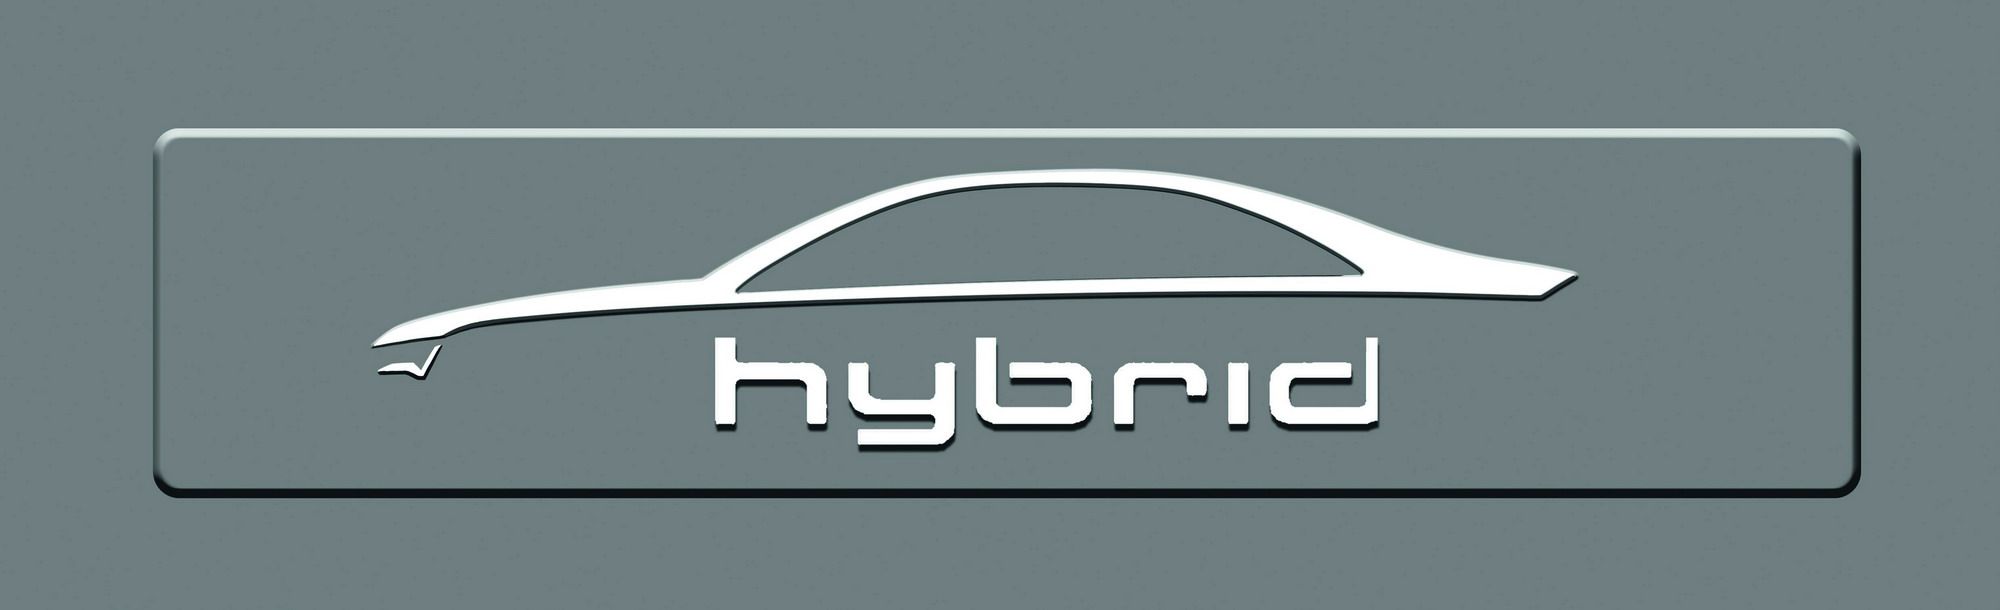 2010 Audi A8 hybrid